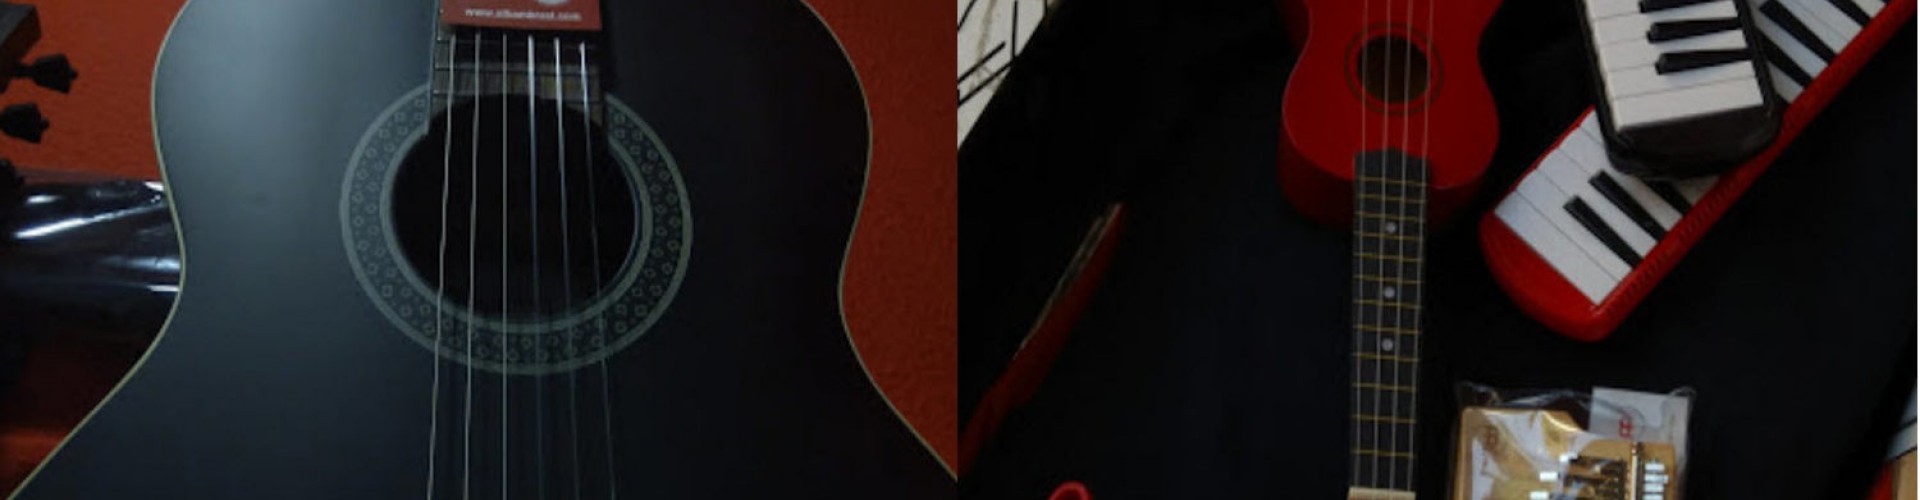 Photo split in half. Left Guitar. Right Guitar and harmonies